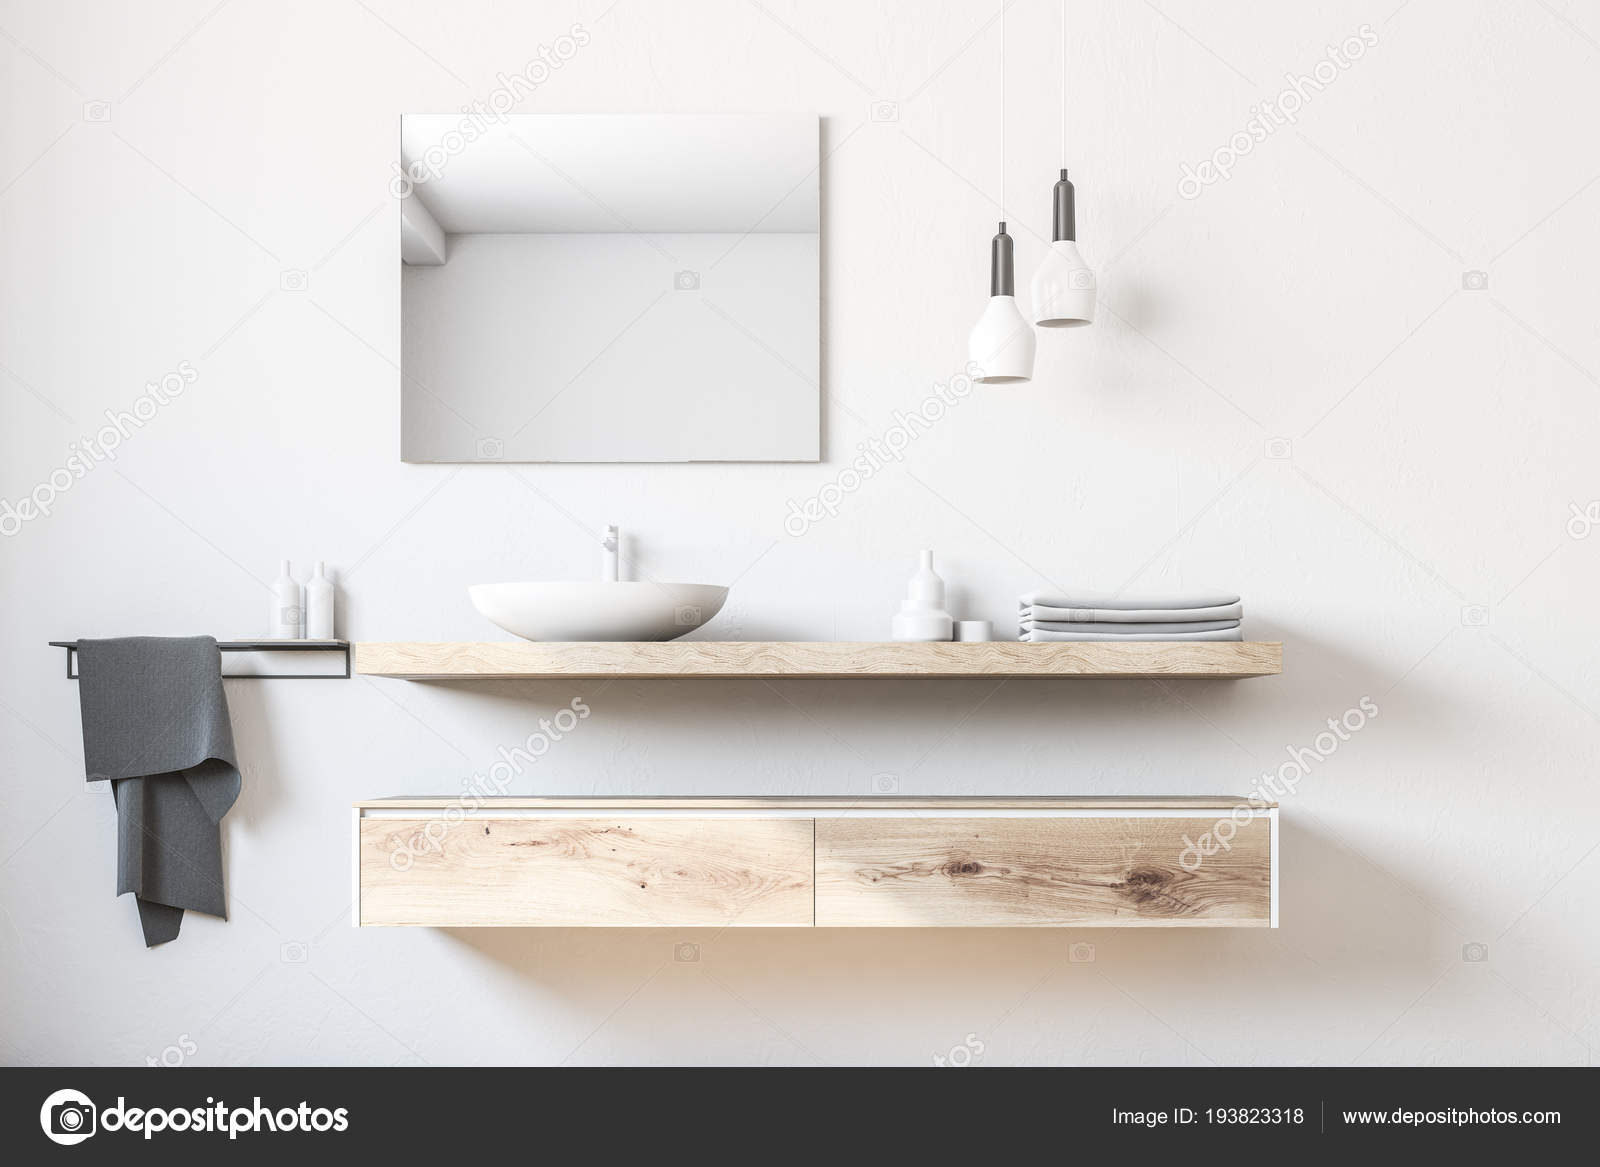 White Bathroom Sink Standing Wooden, Wood Shelf Bathroom Sink